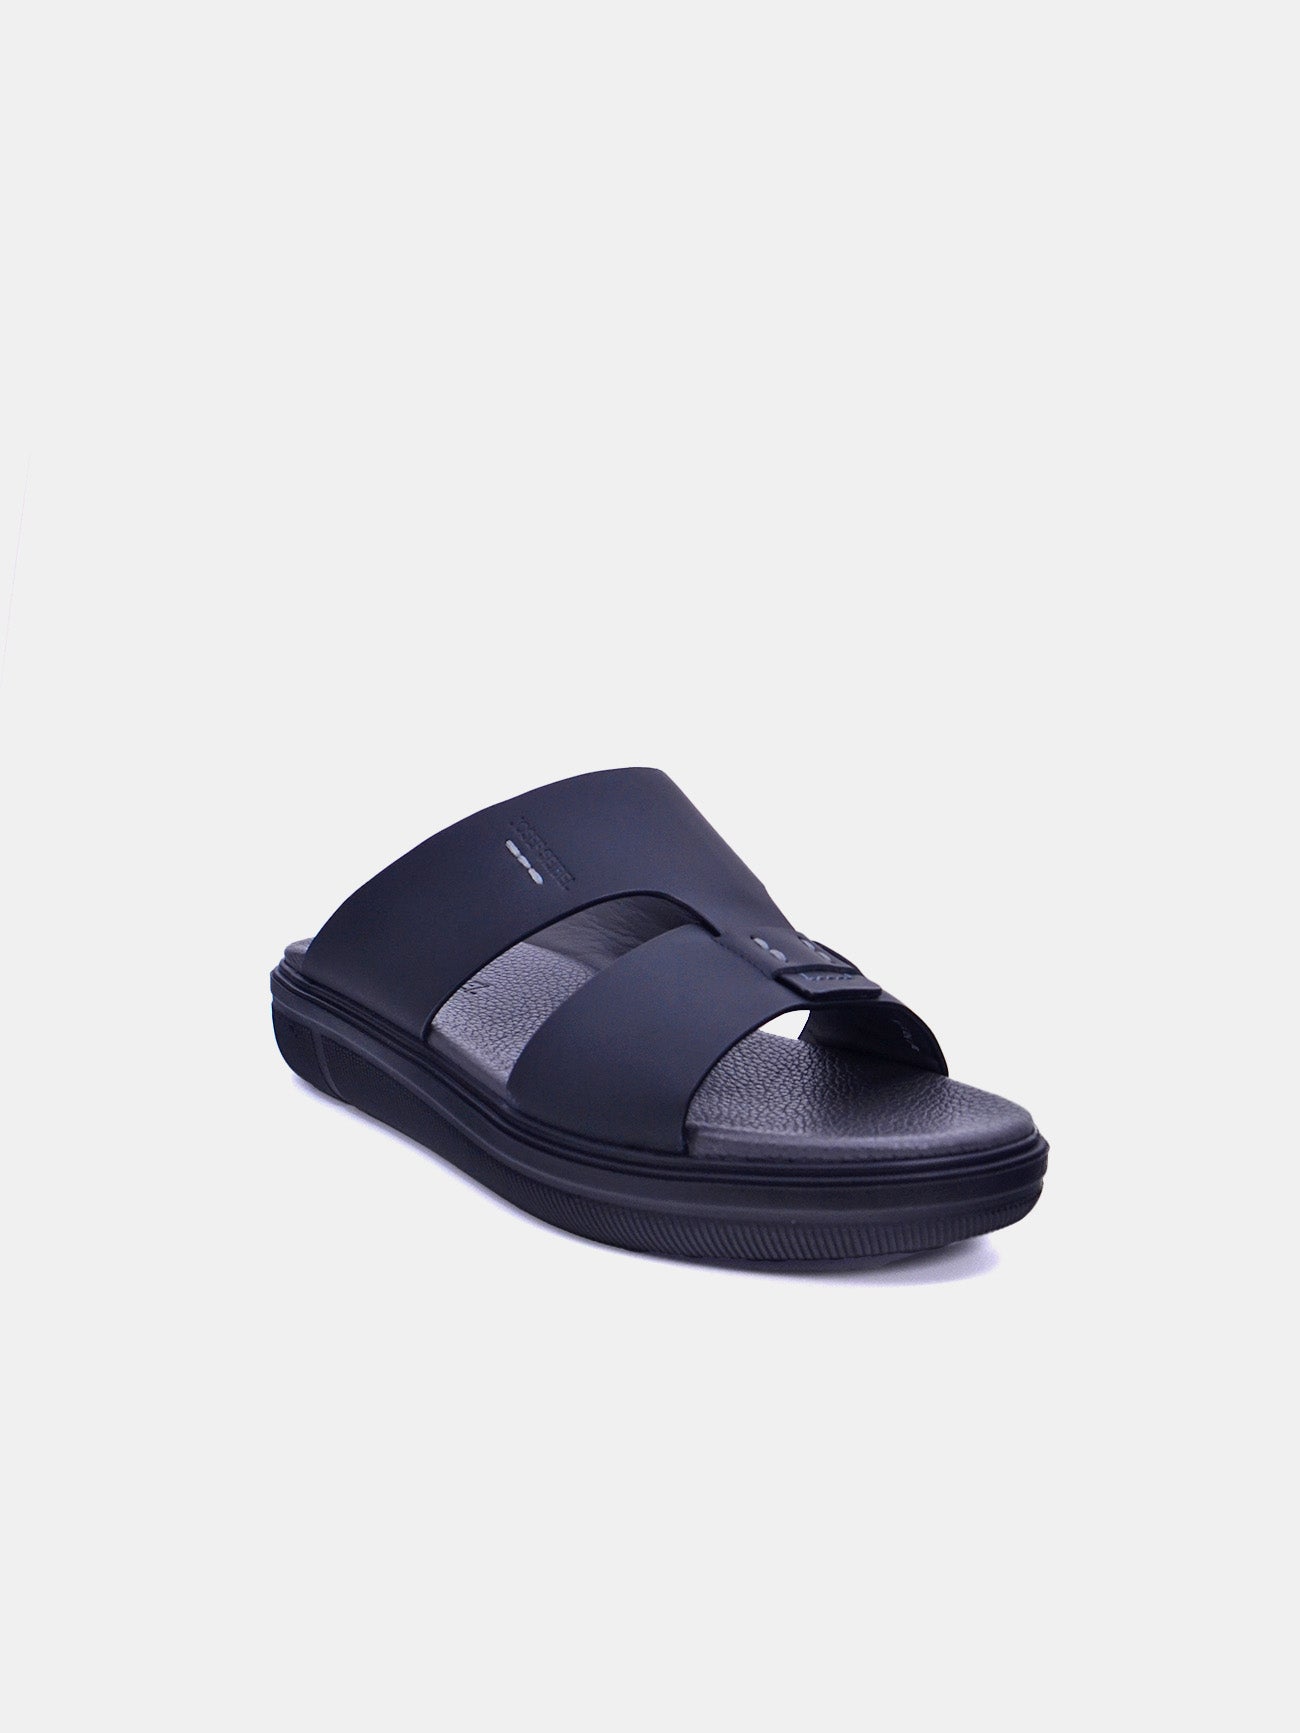 Josef Seibel JS 101 Men's Sandals #color_Black